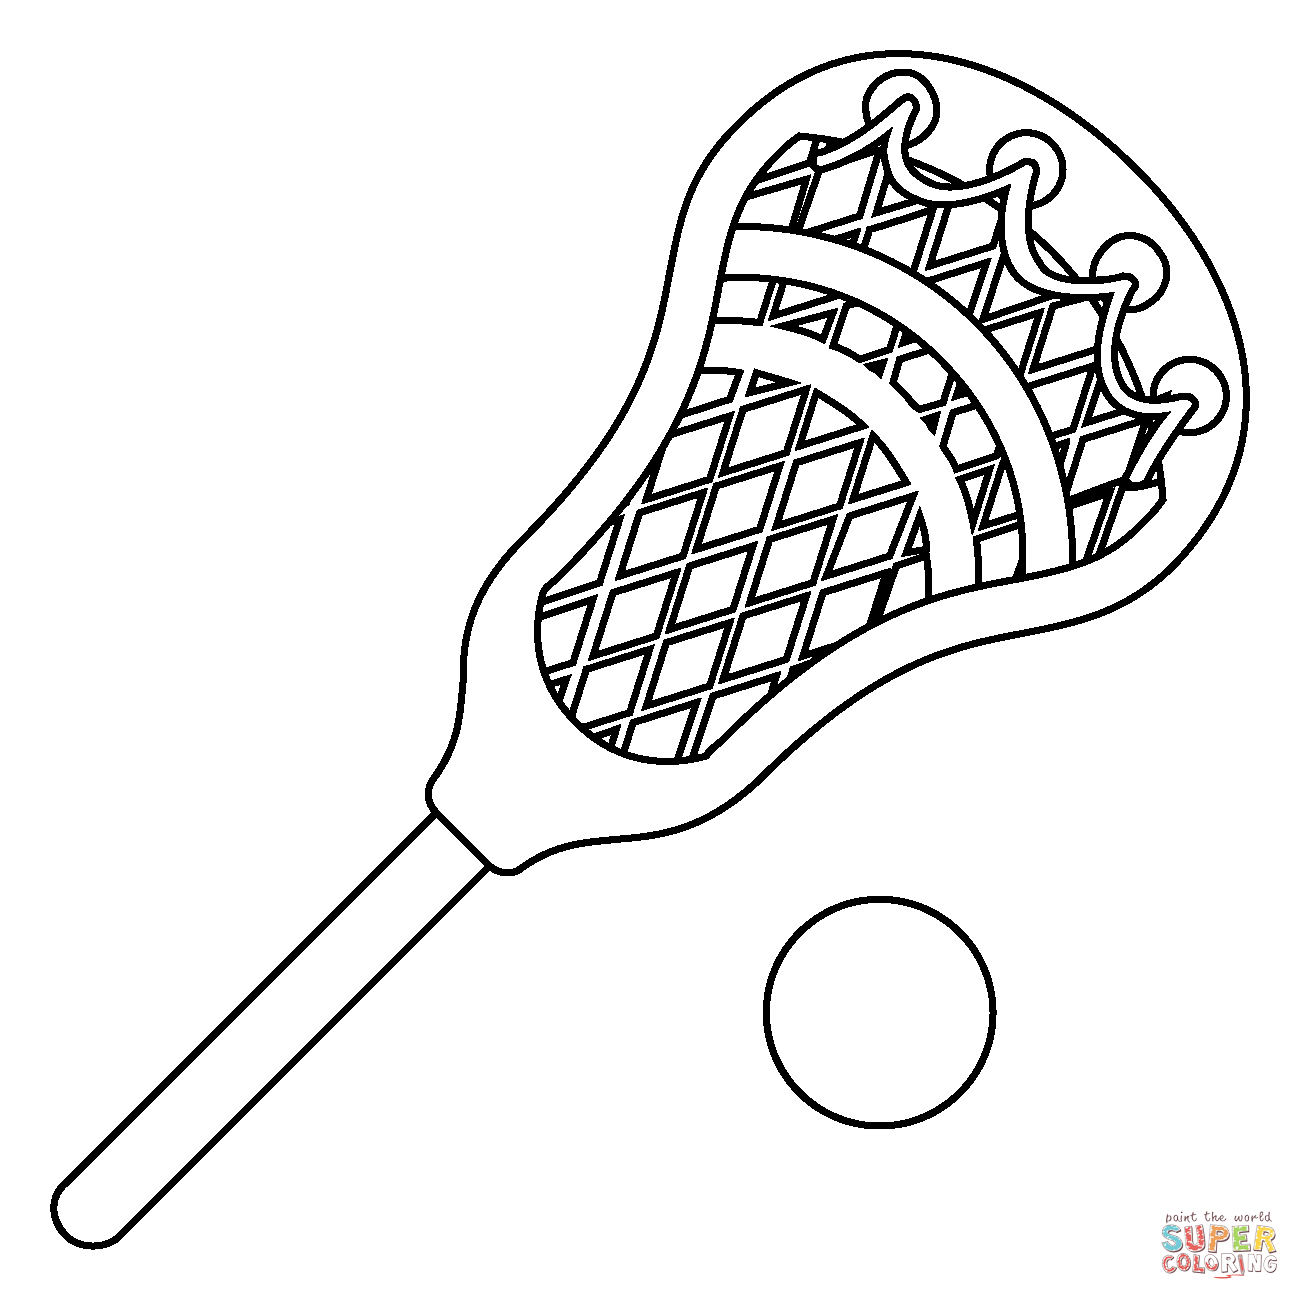 Lacrosse emoji coloring page free printable coloring pages